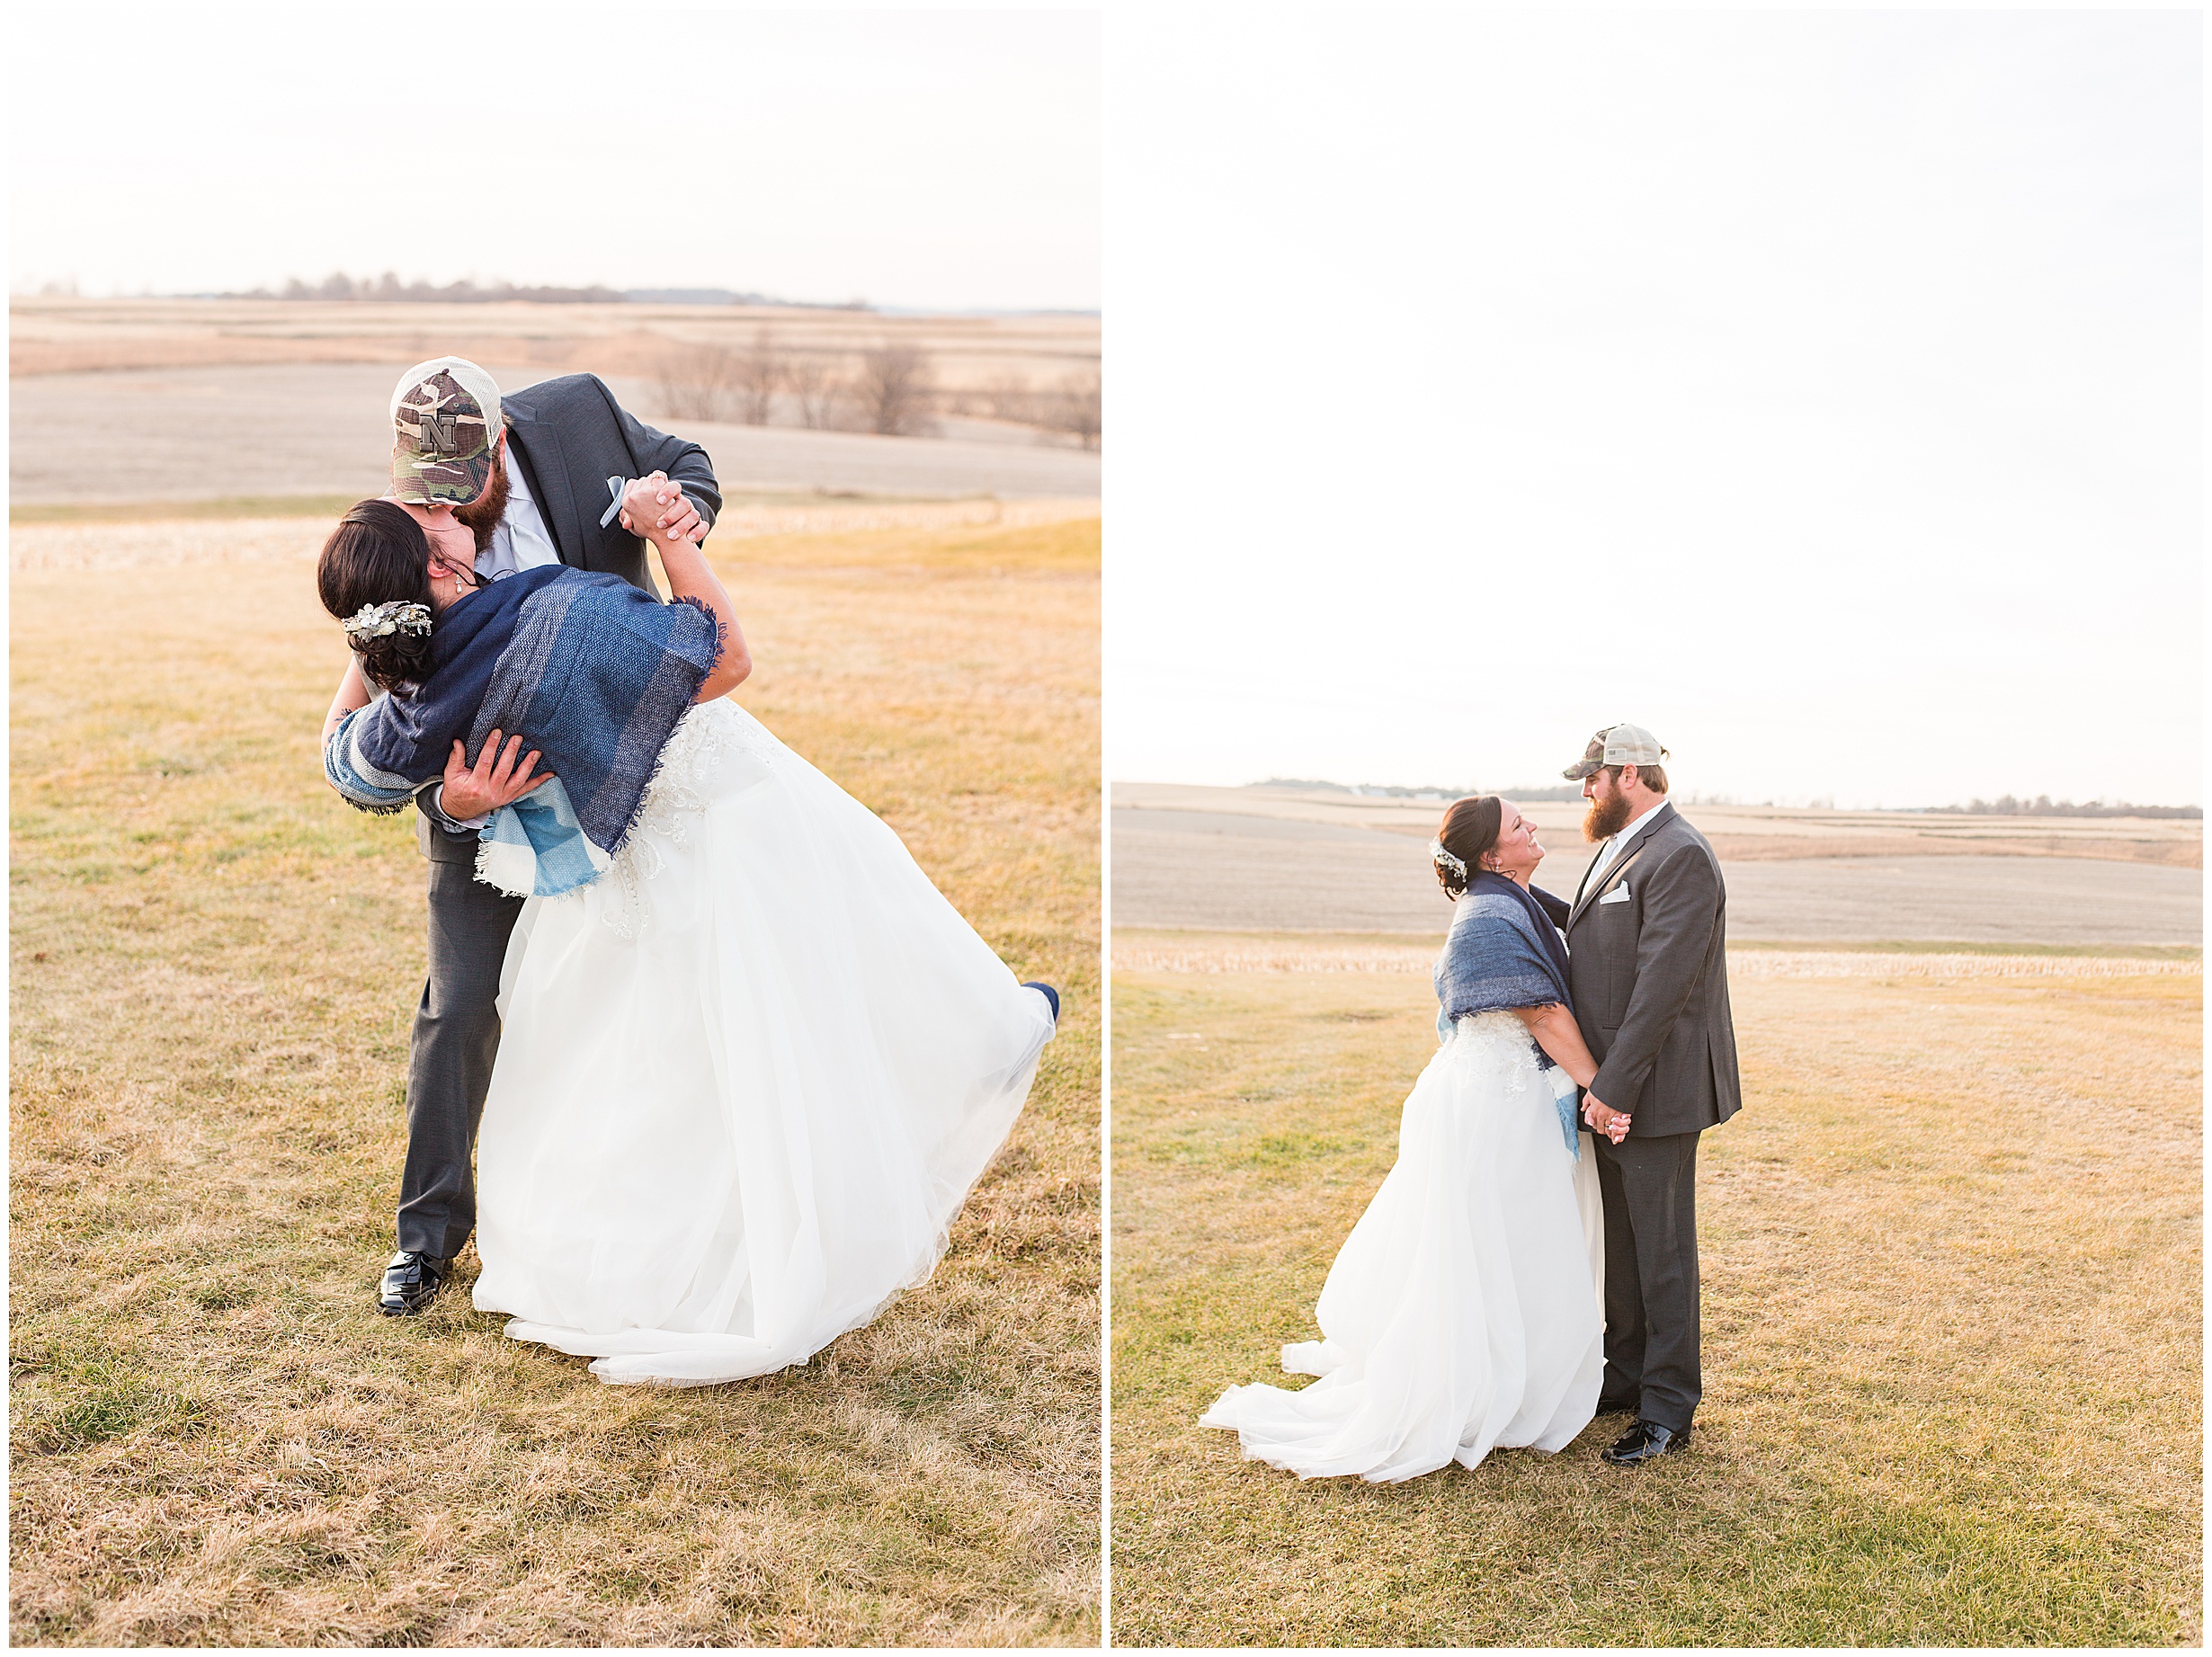 Iowa City Photographers - Decorah Wedding -Megan Snitker Photography_0160.jpg